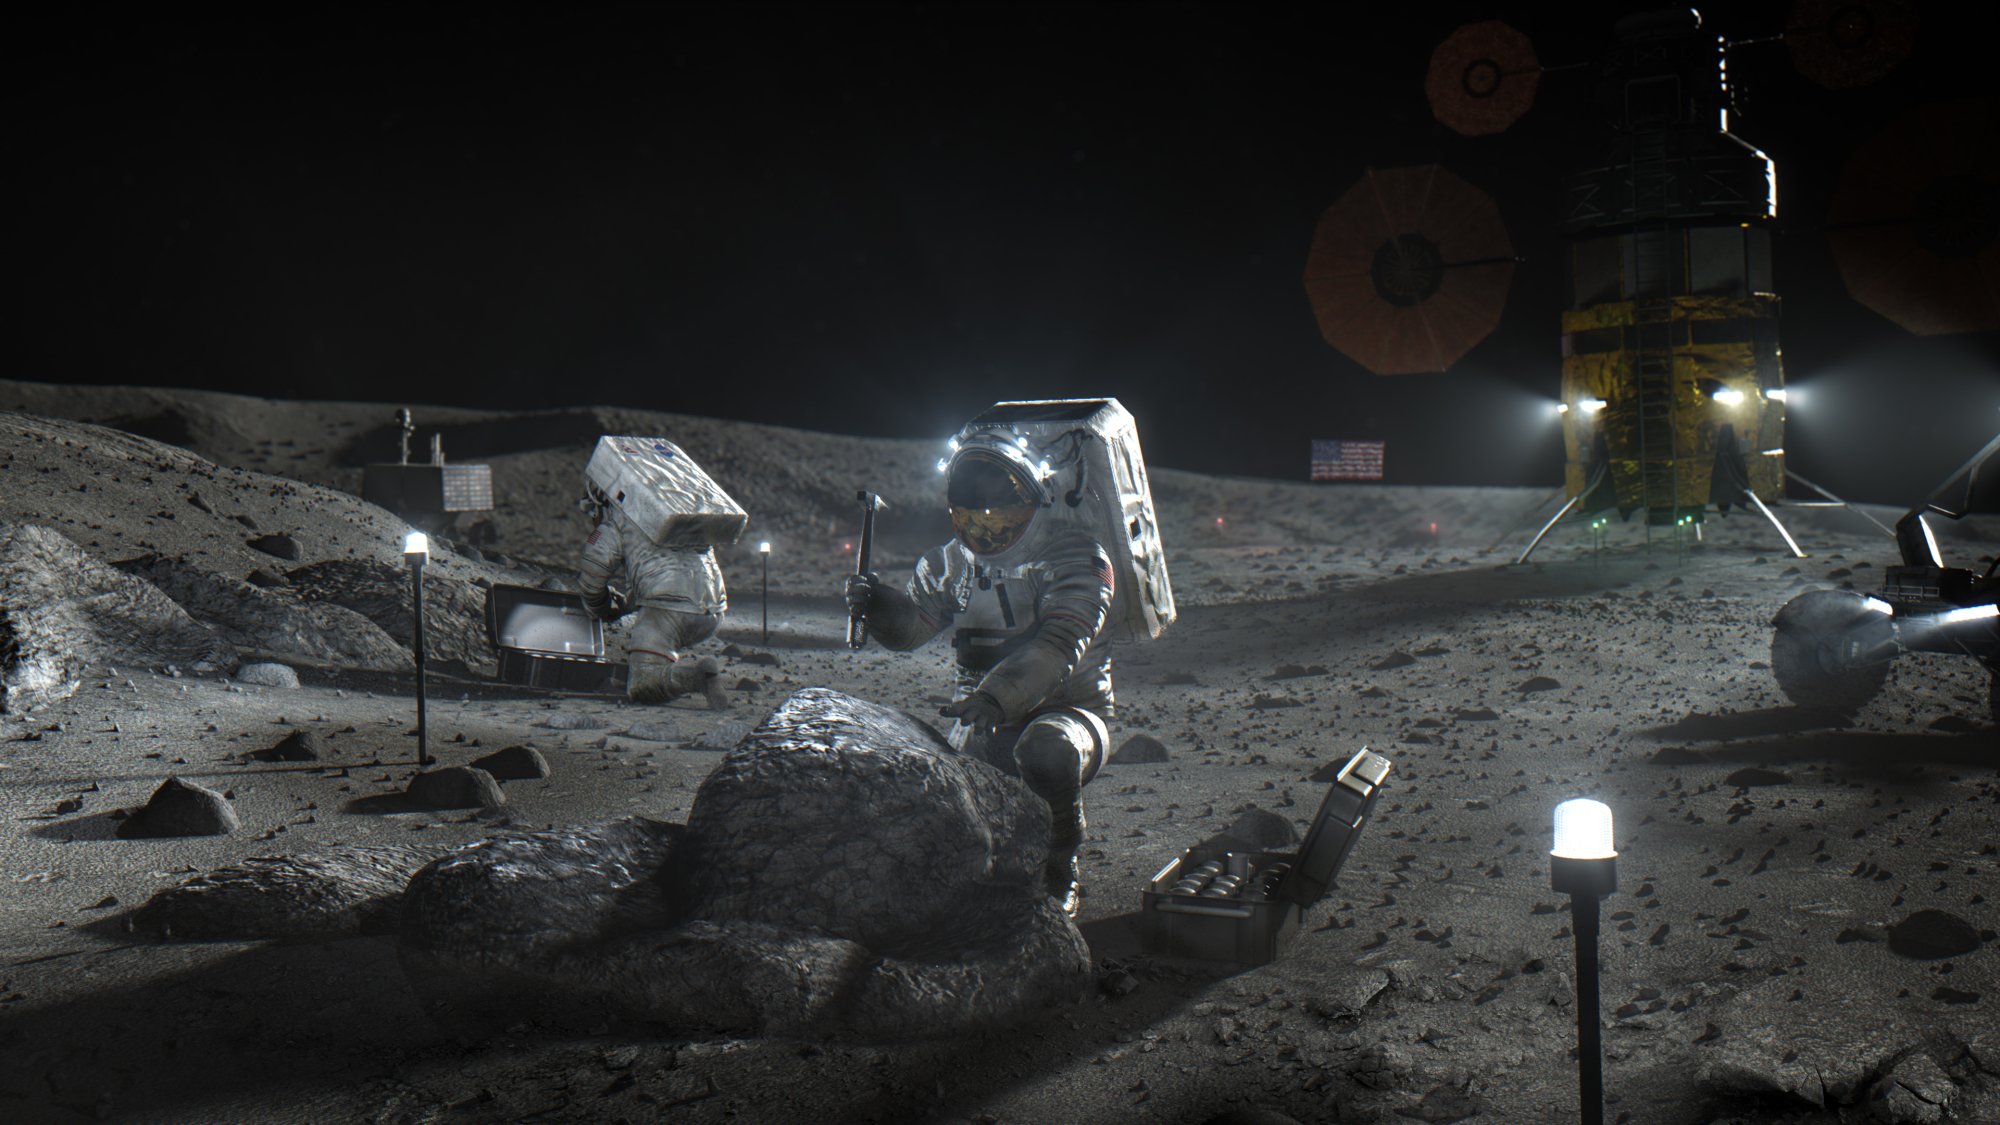 Artemis astronauts working on the moon